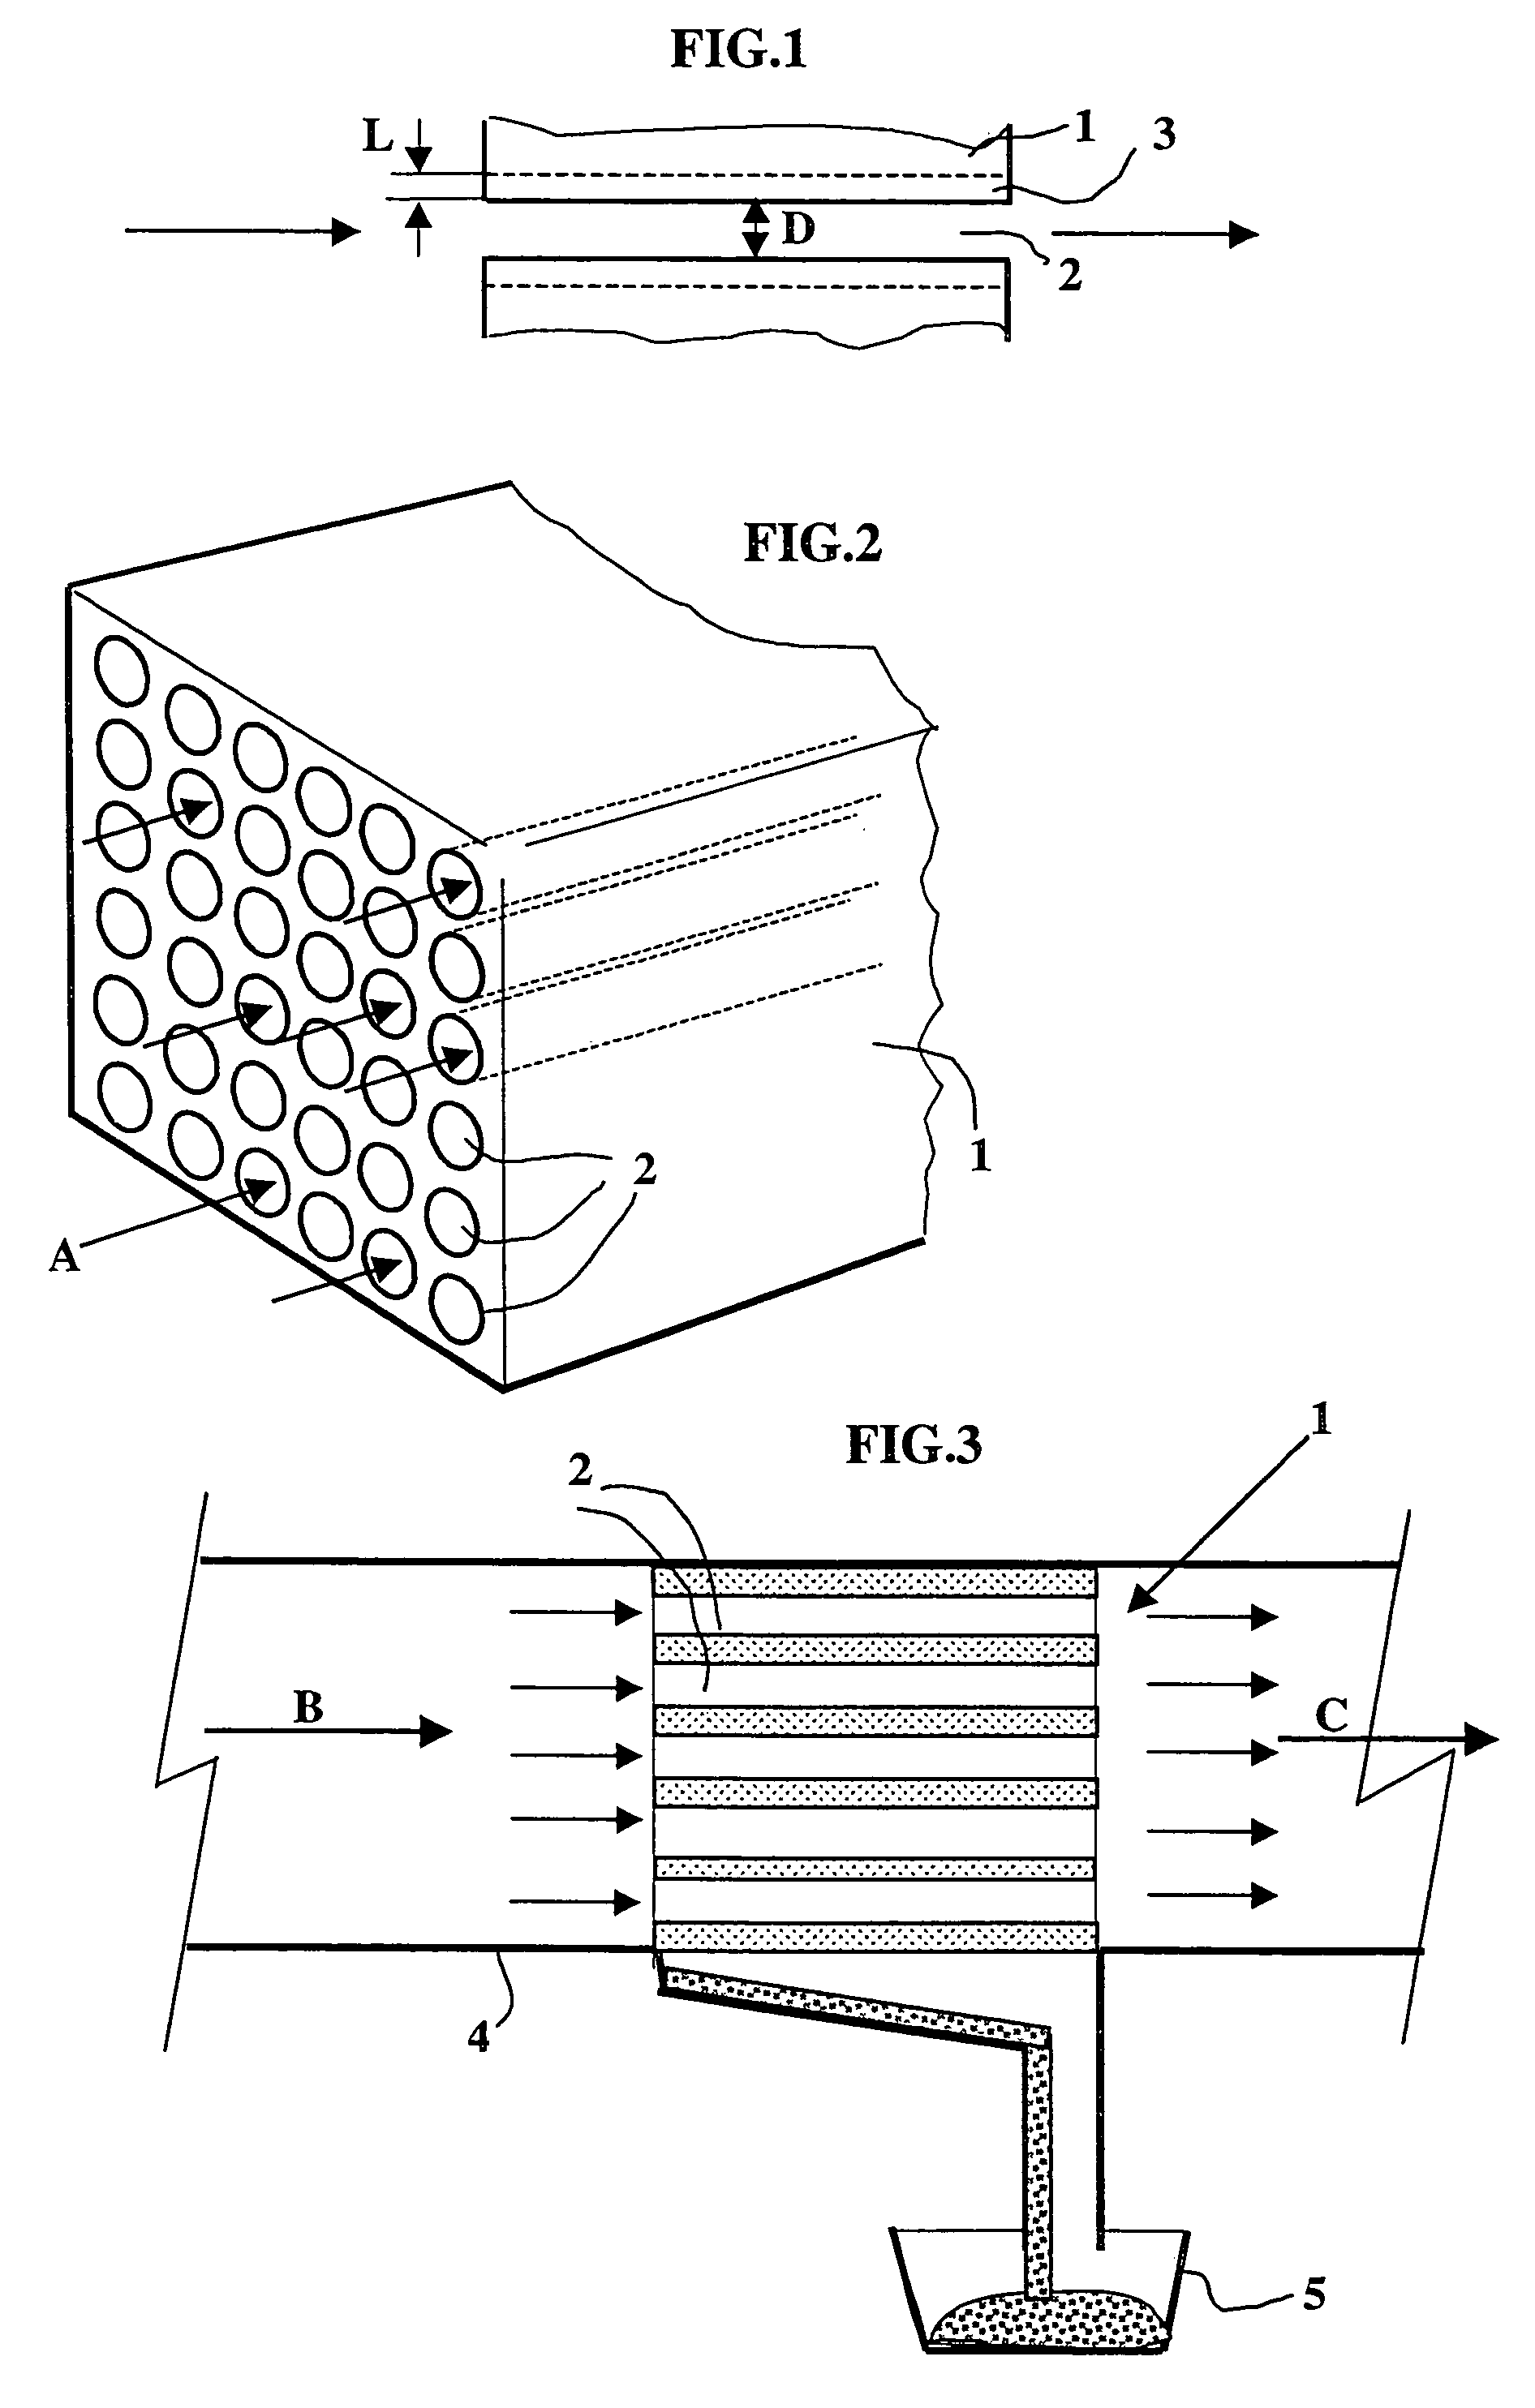 Separator made of a fibrous porous material such as a felt